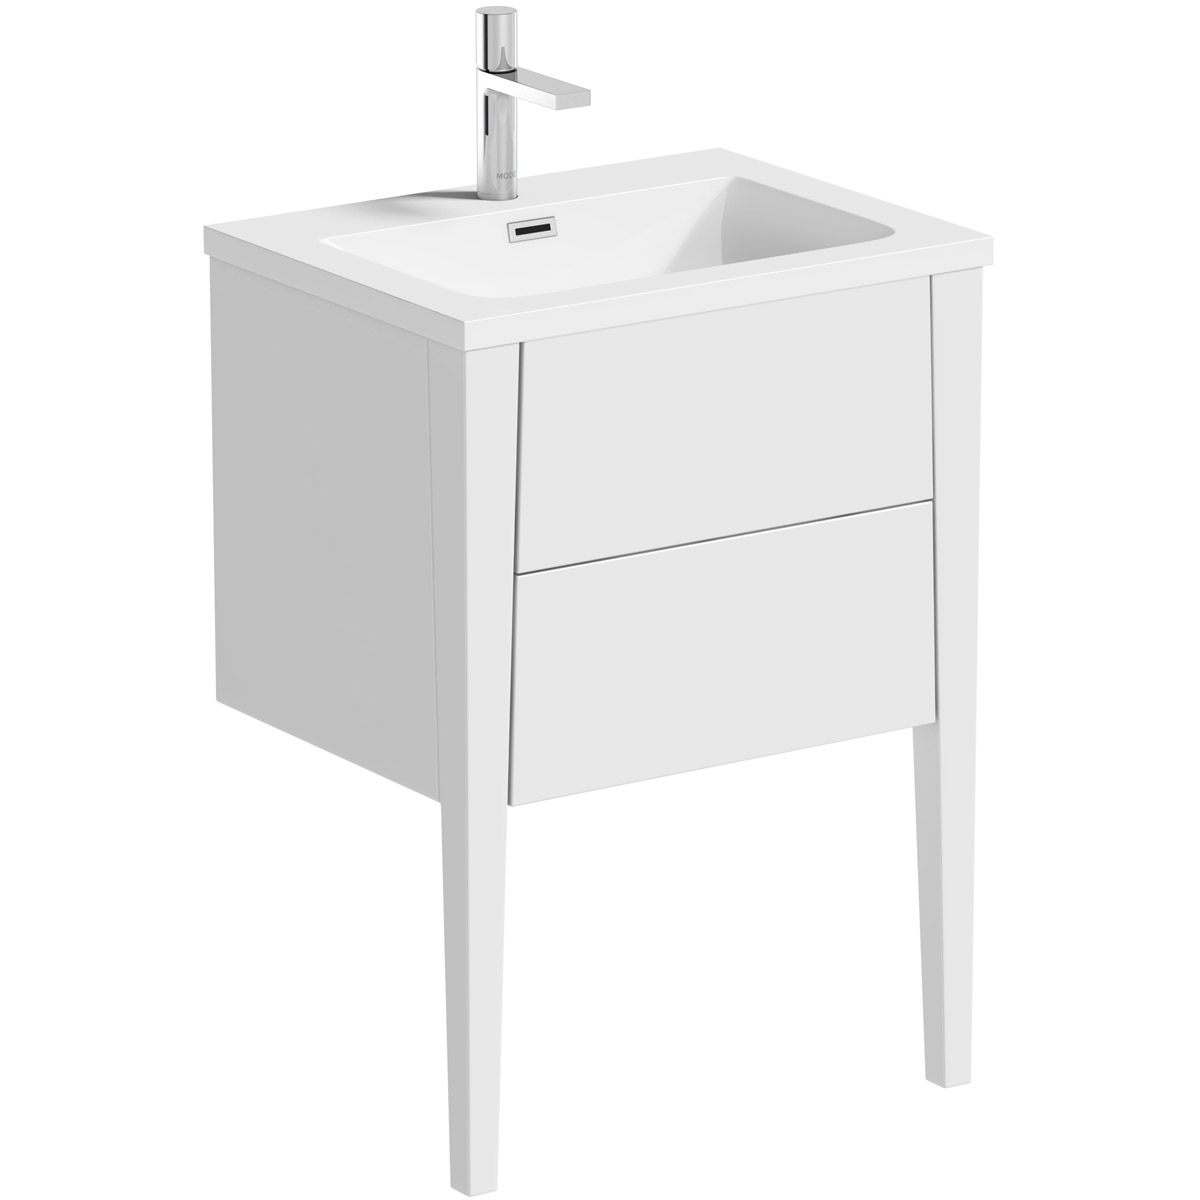 600 mm White Gloss Vanity Sink Unit Ceramic Basin Wall Hung Bathroom Furniture MV804 